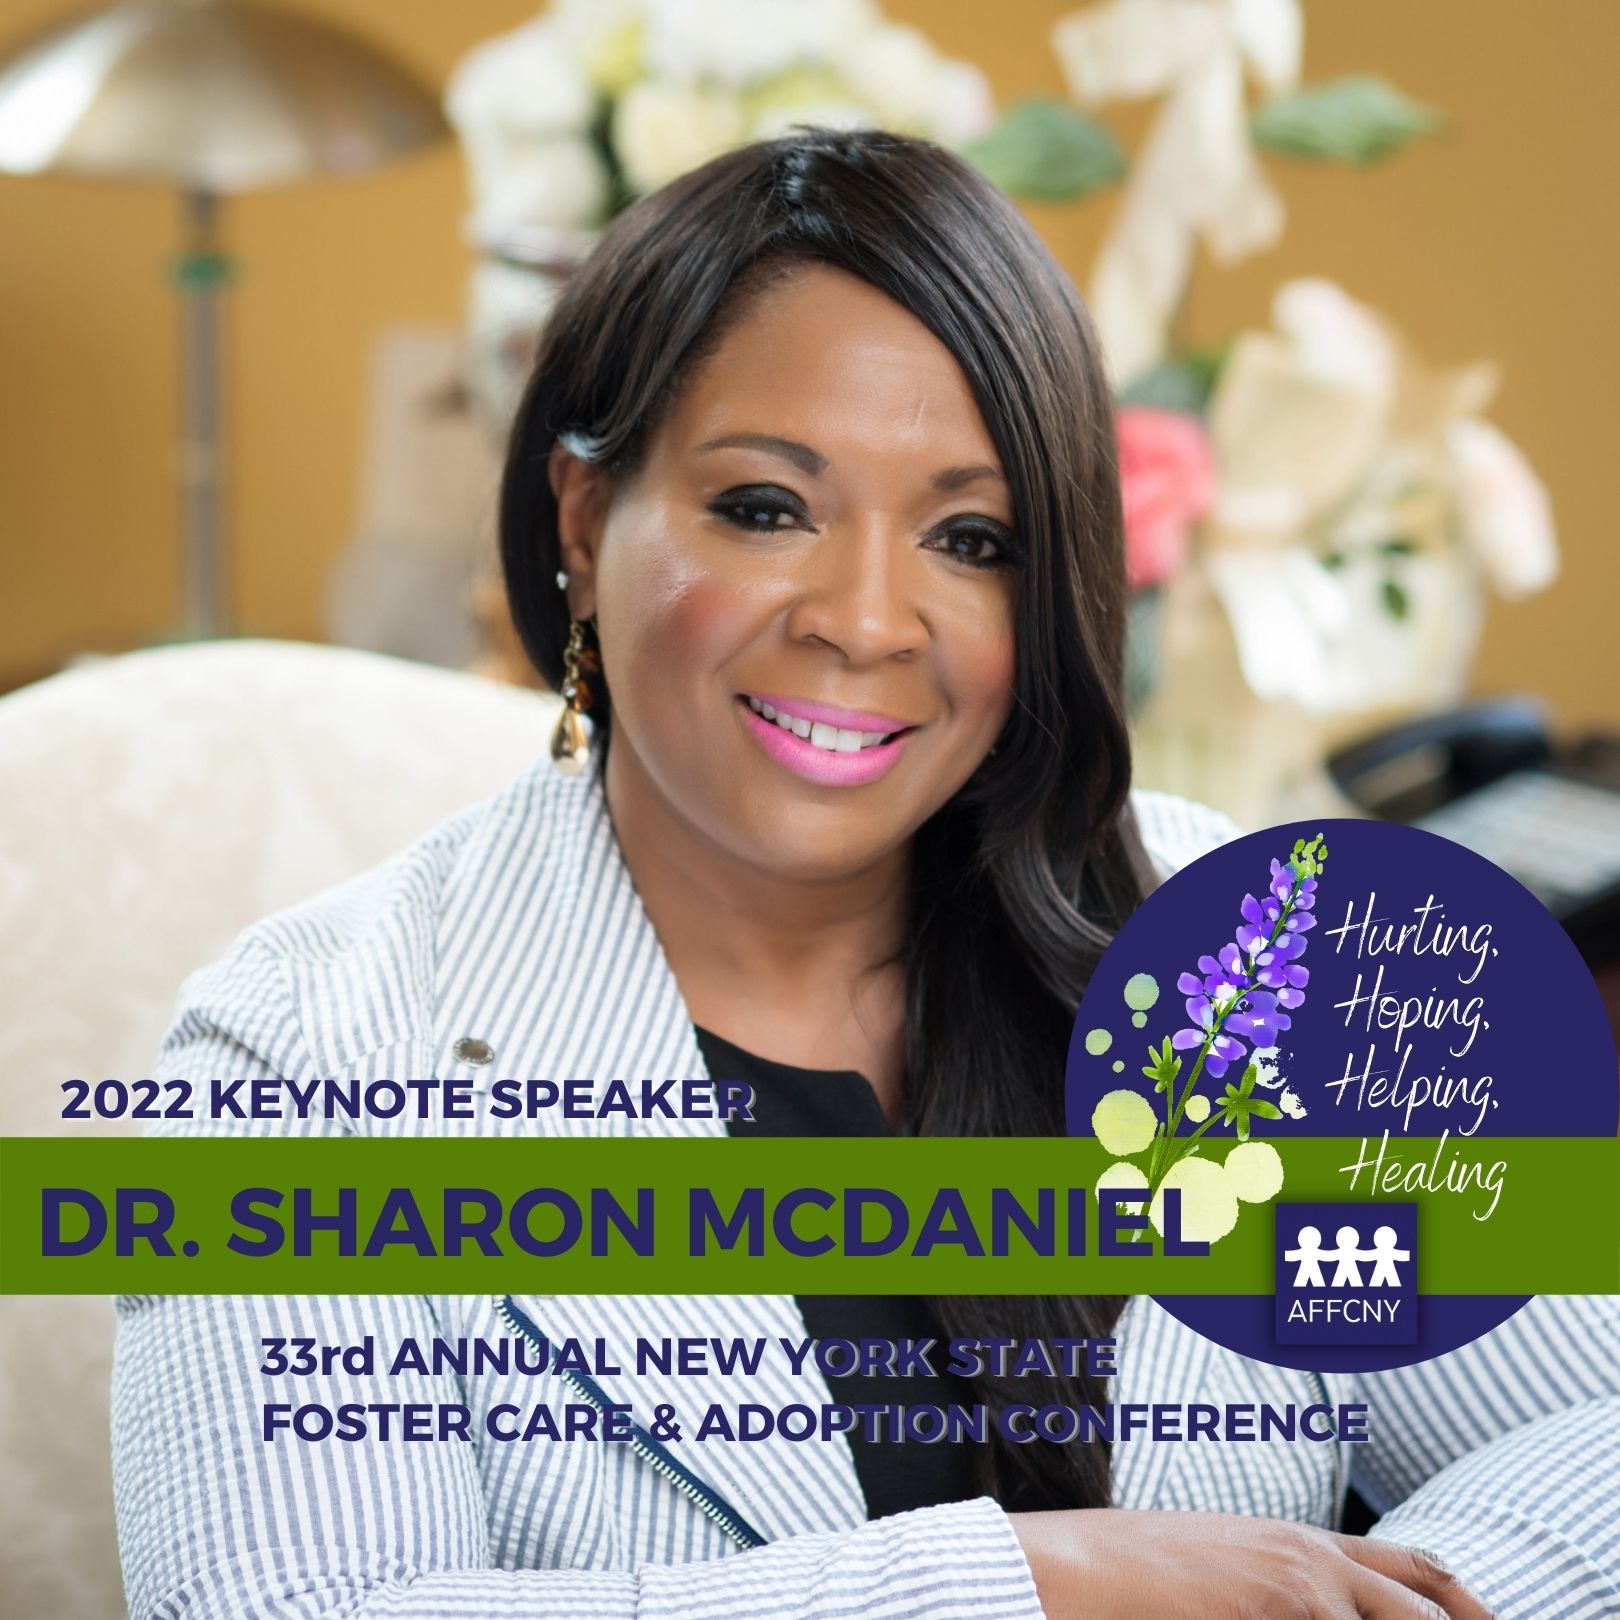 Dr. Sharon McDaniel